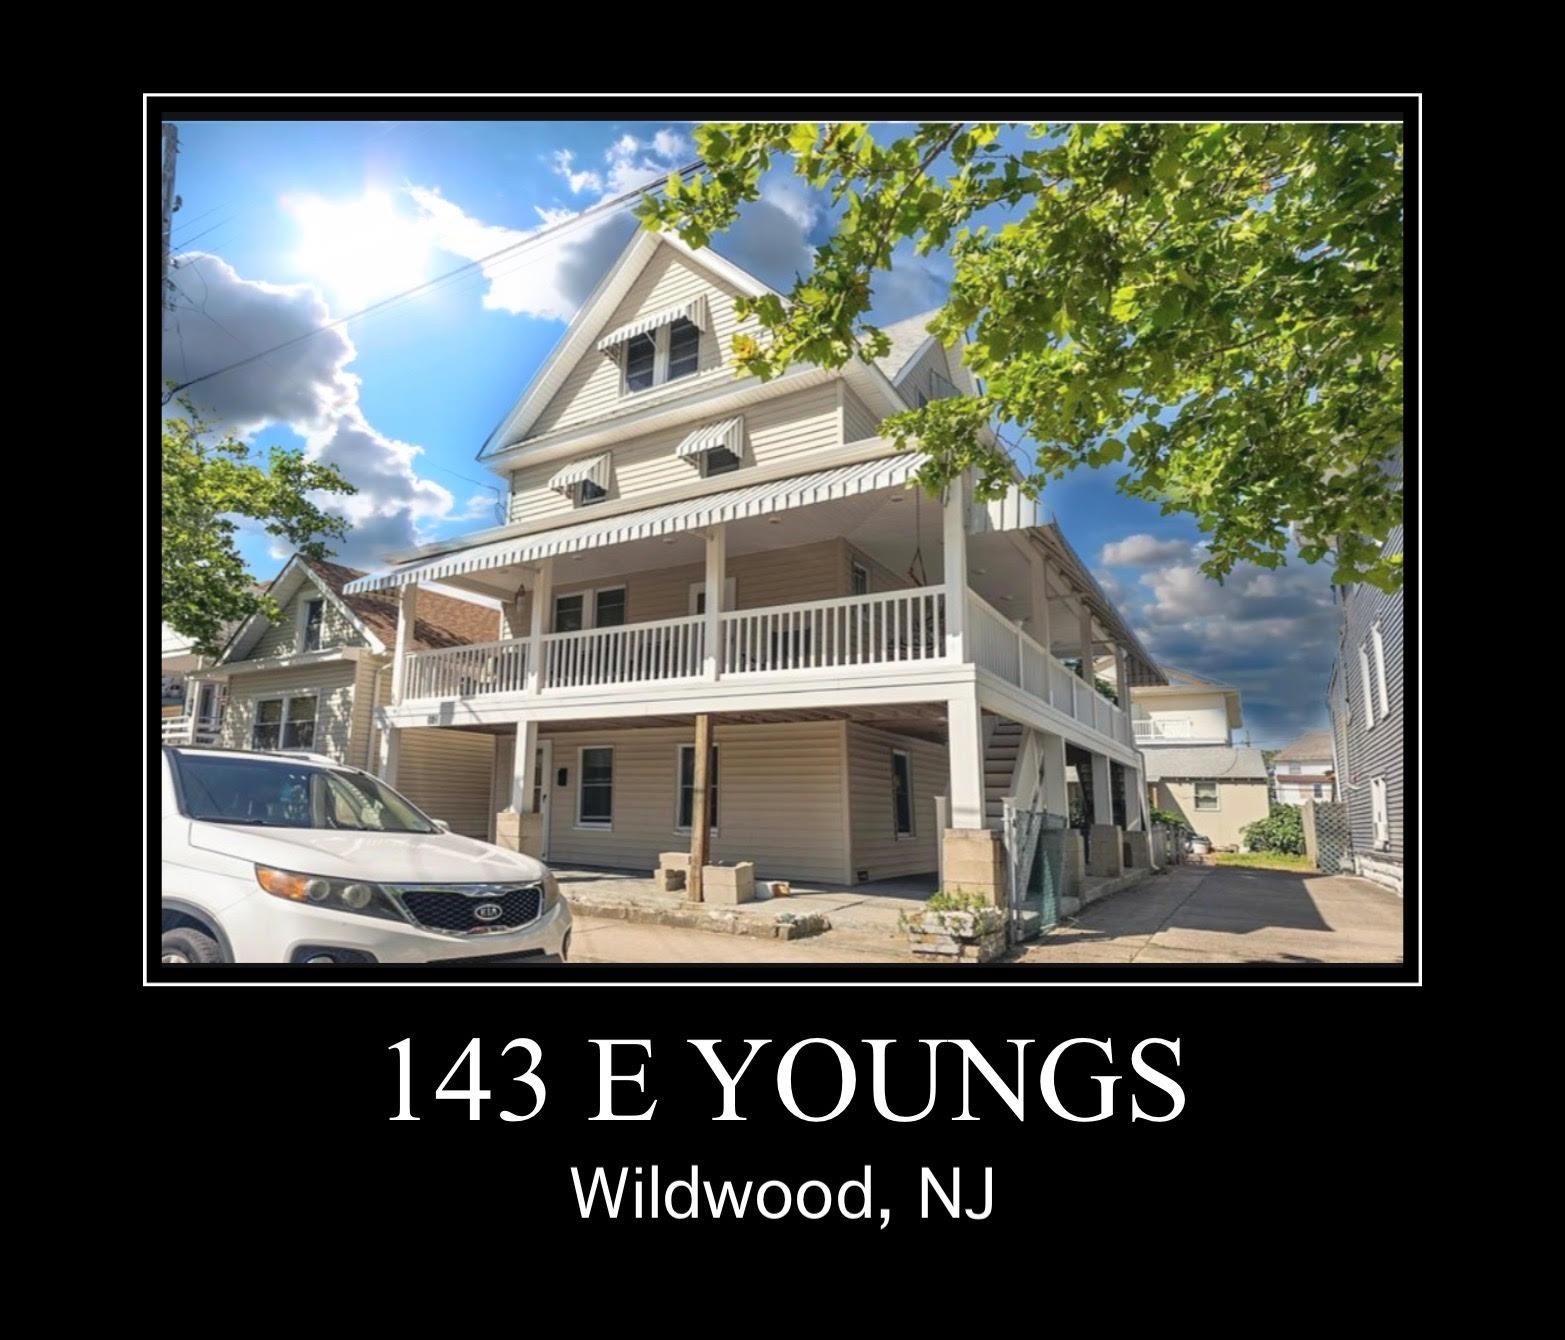 143 E Youngs Avenue - Wildwood